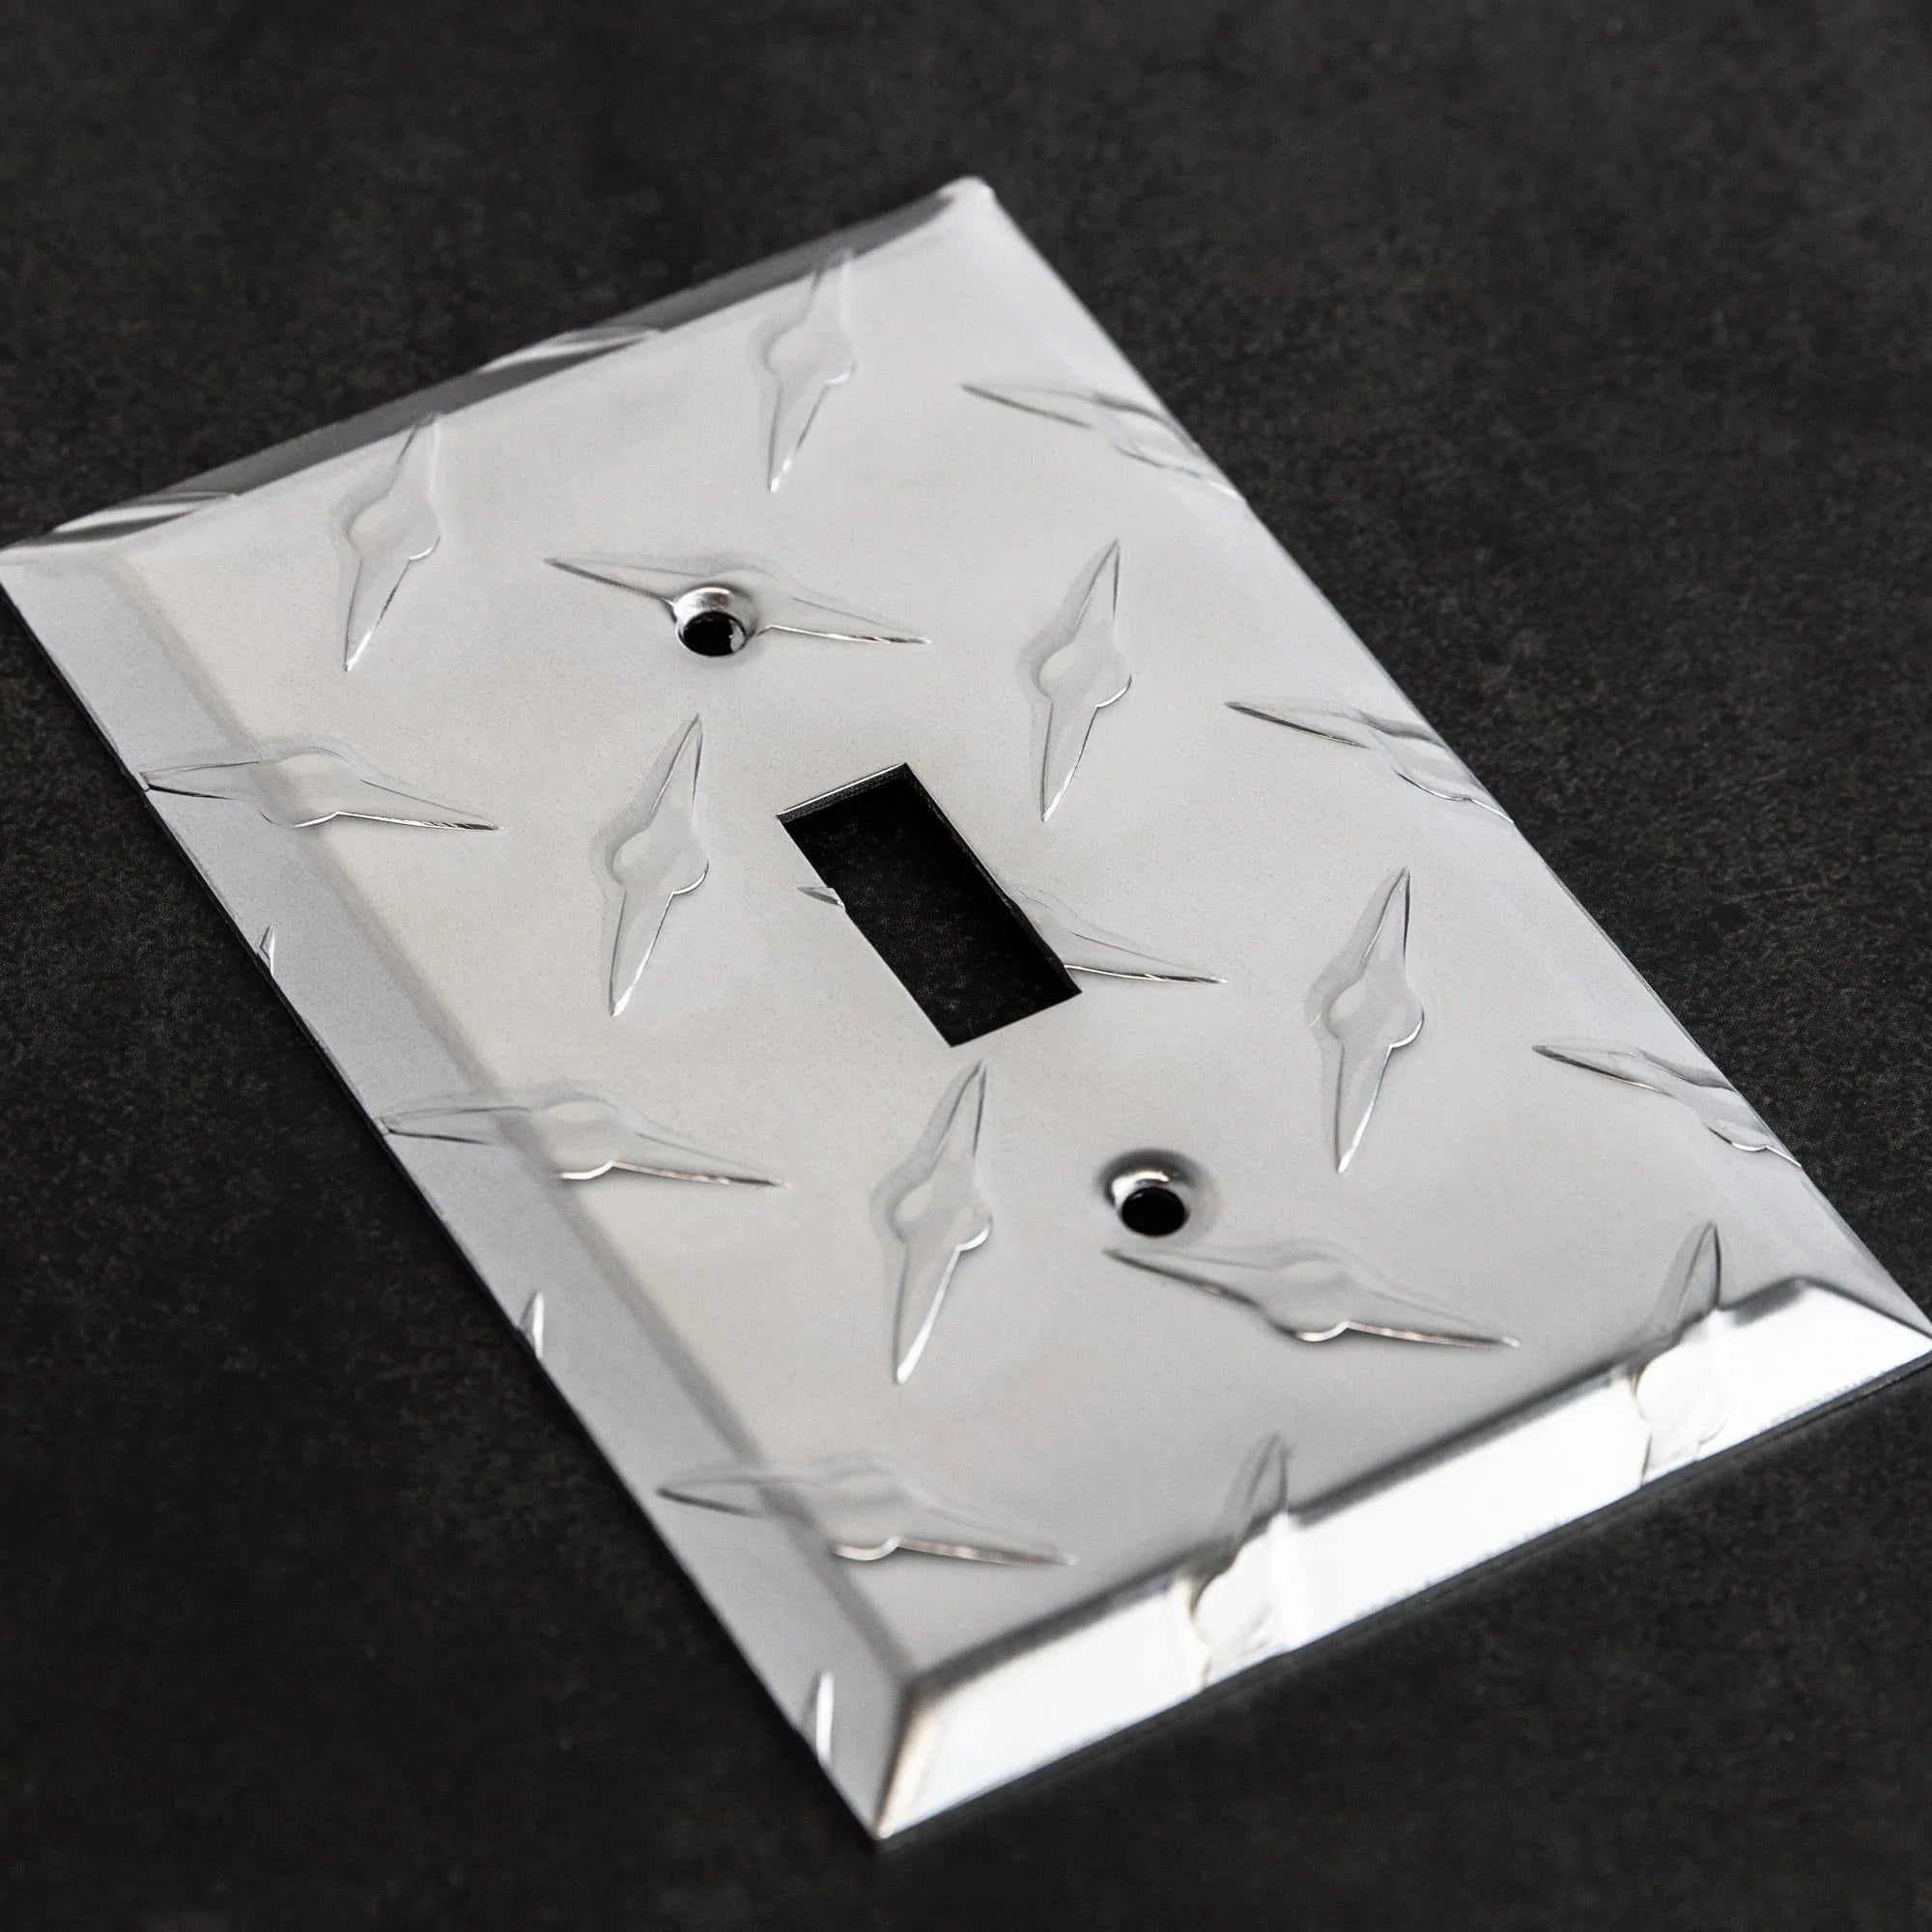 Diamond Plate Aluminum - 1 Toggle / 1 Duplex Wallplate